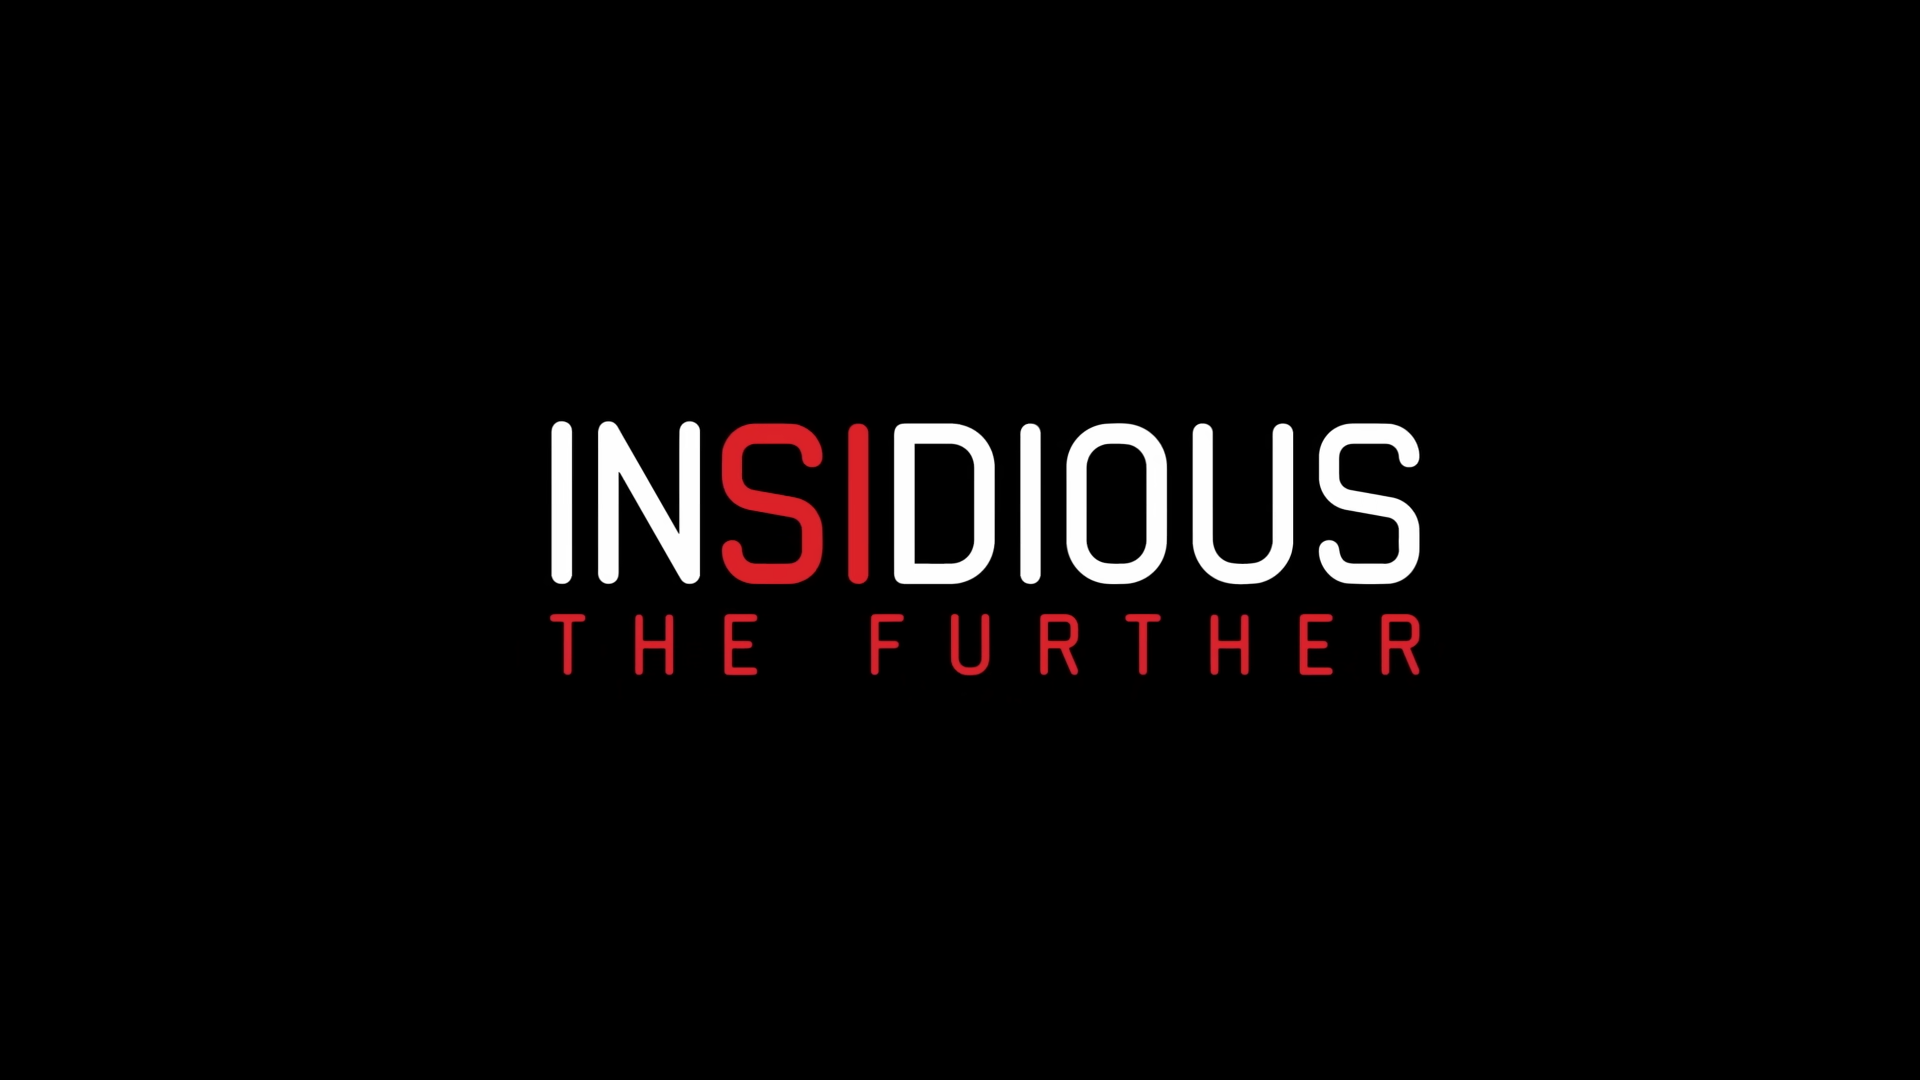 “Insidious: The Further”Universal Studios’ Halloween Horror Nights